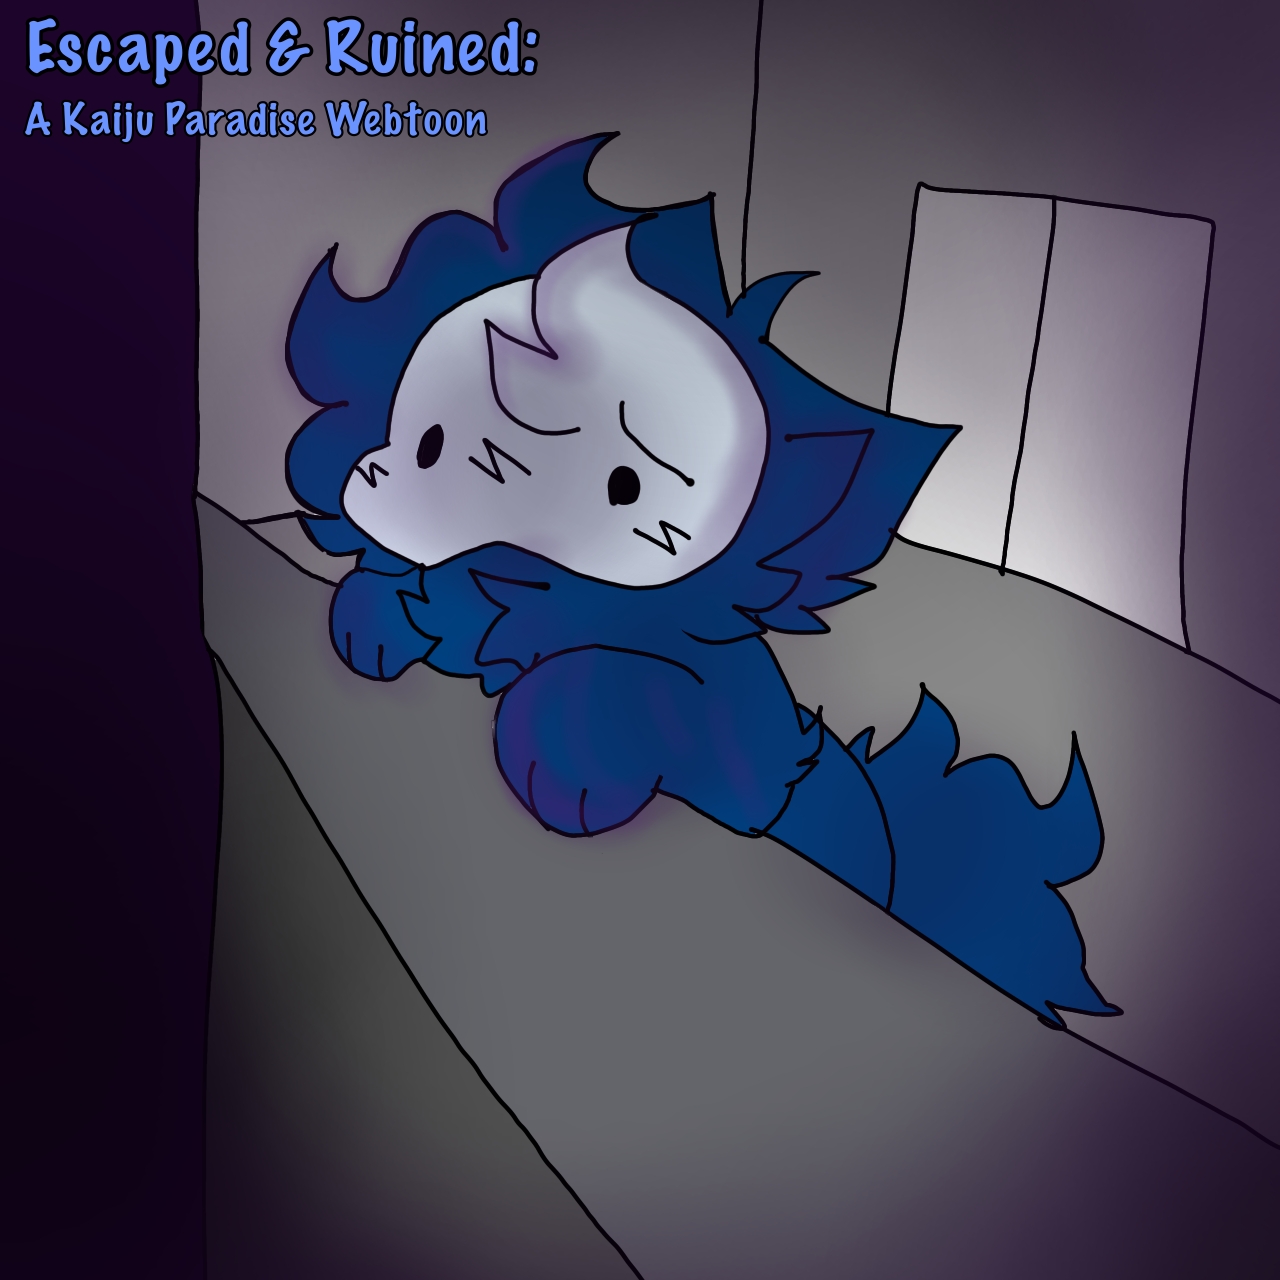 Escaped & Ruined: A Kaiju Paradise Webtoon